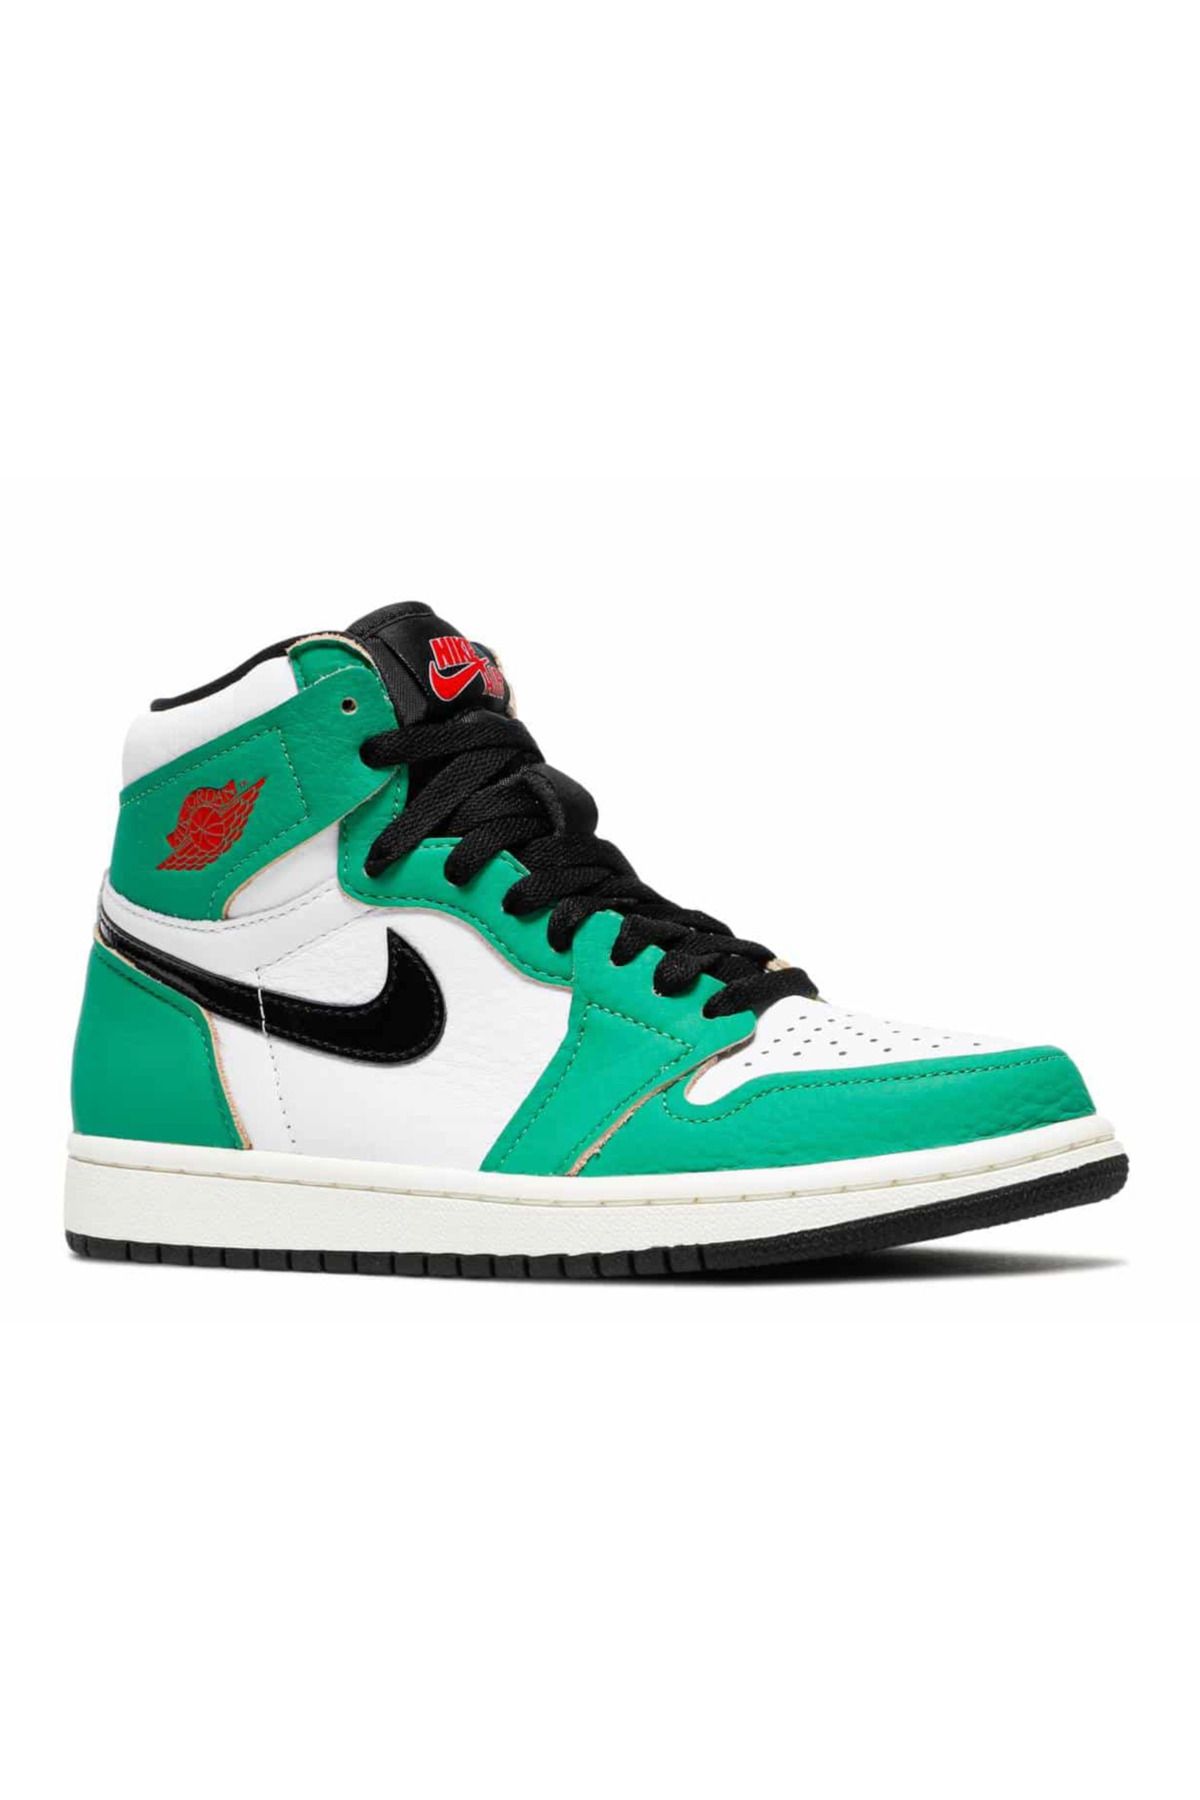 Nike Air Jordan 1 Retro High Lucky Green (W)